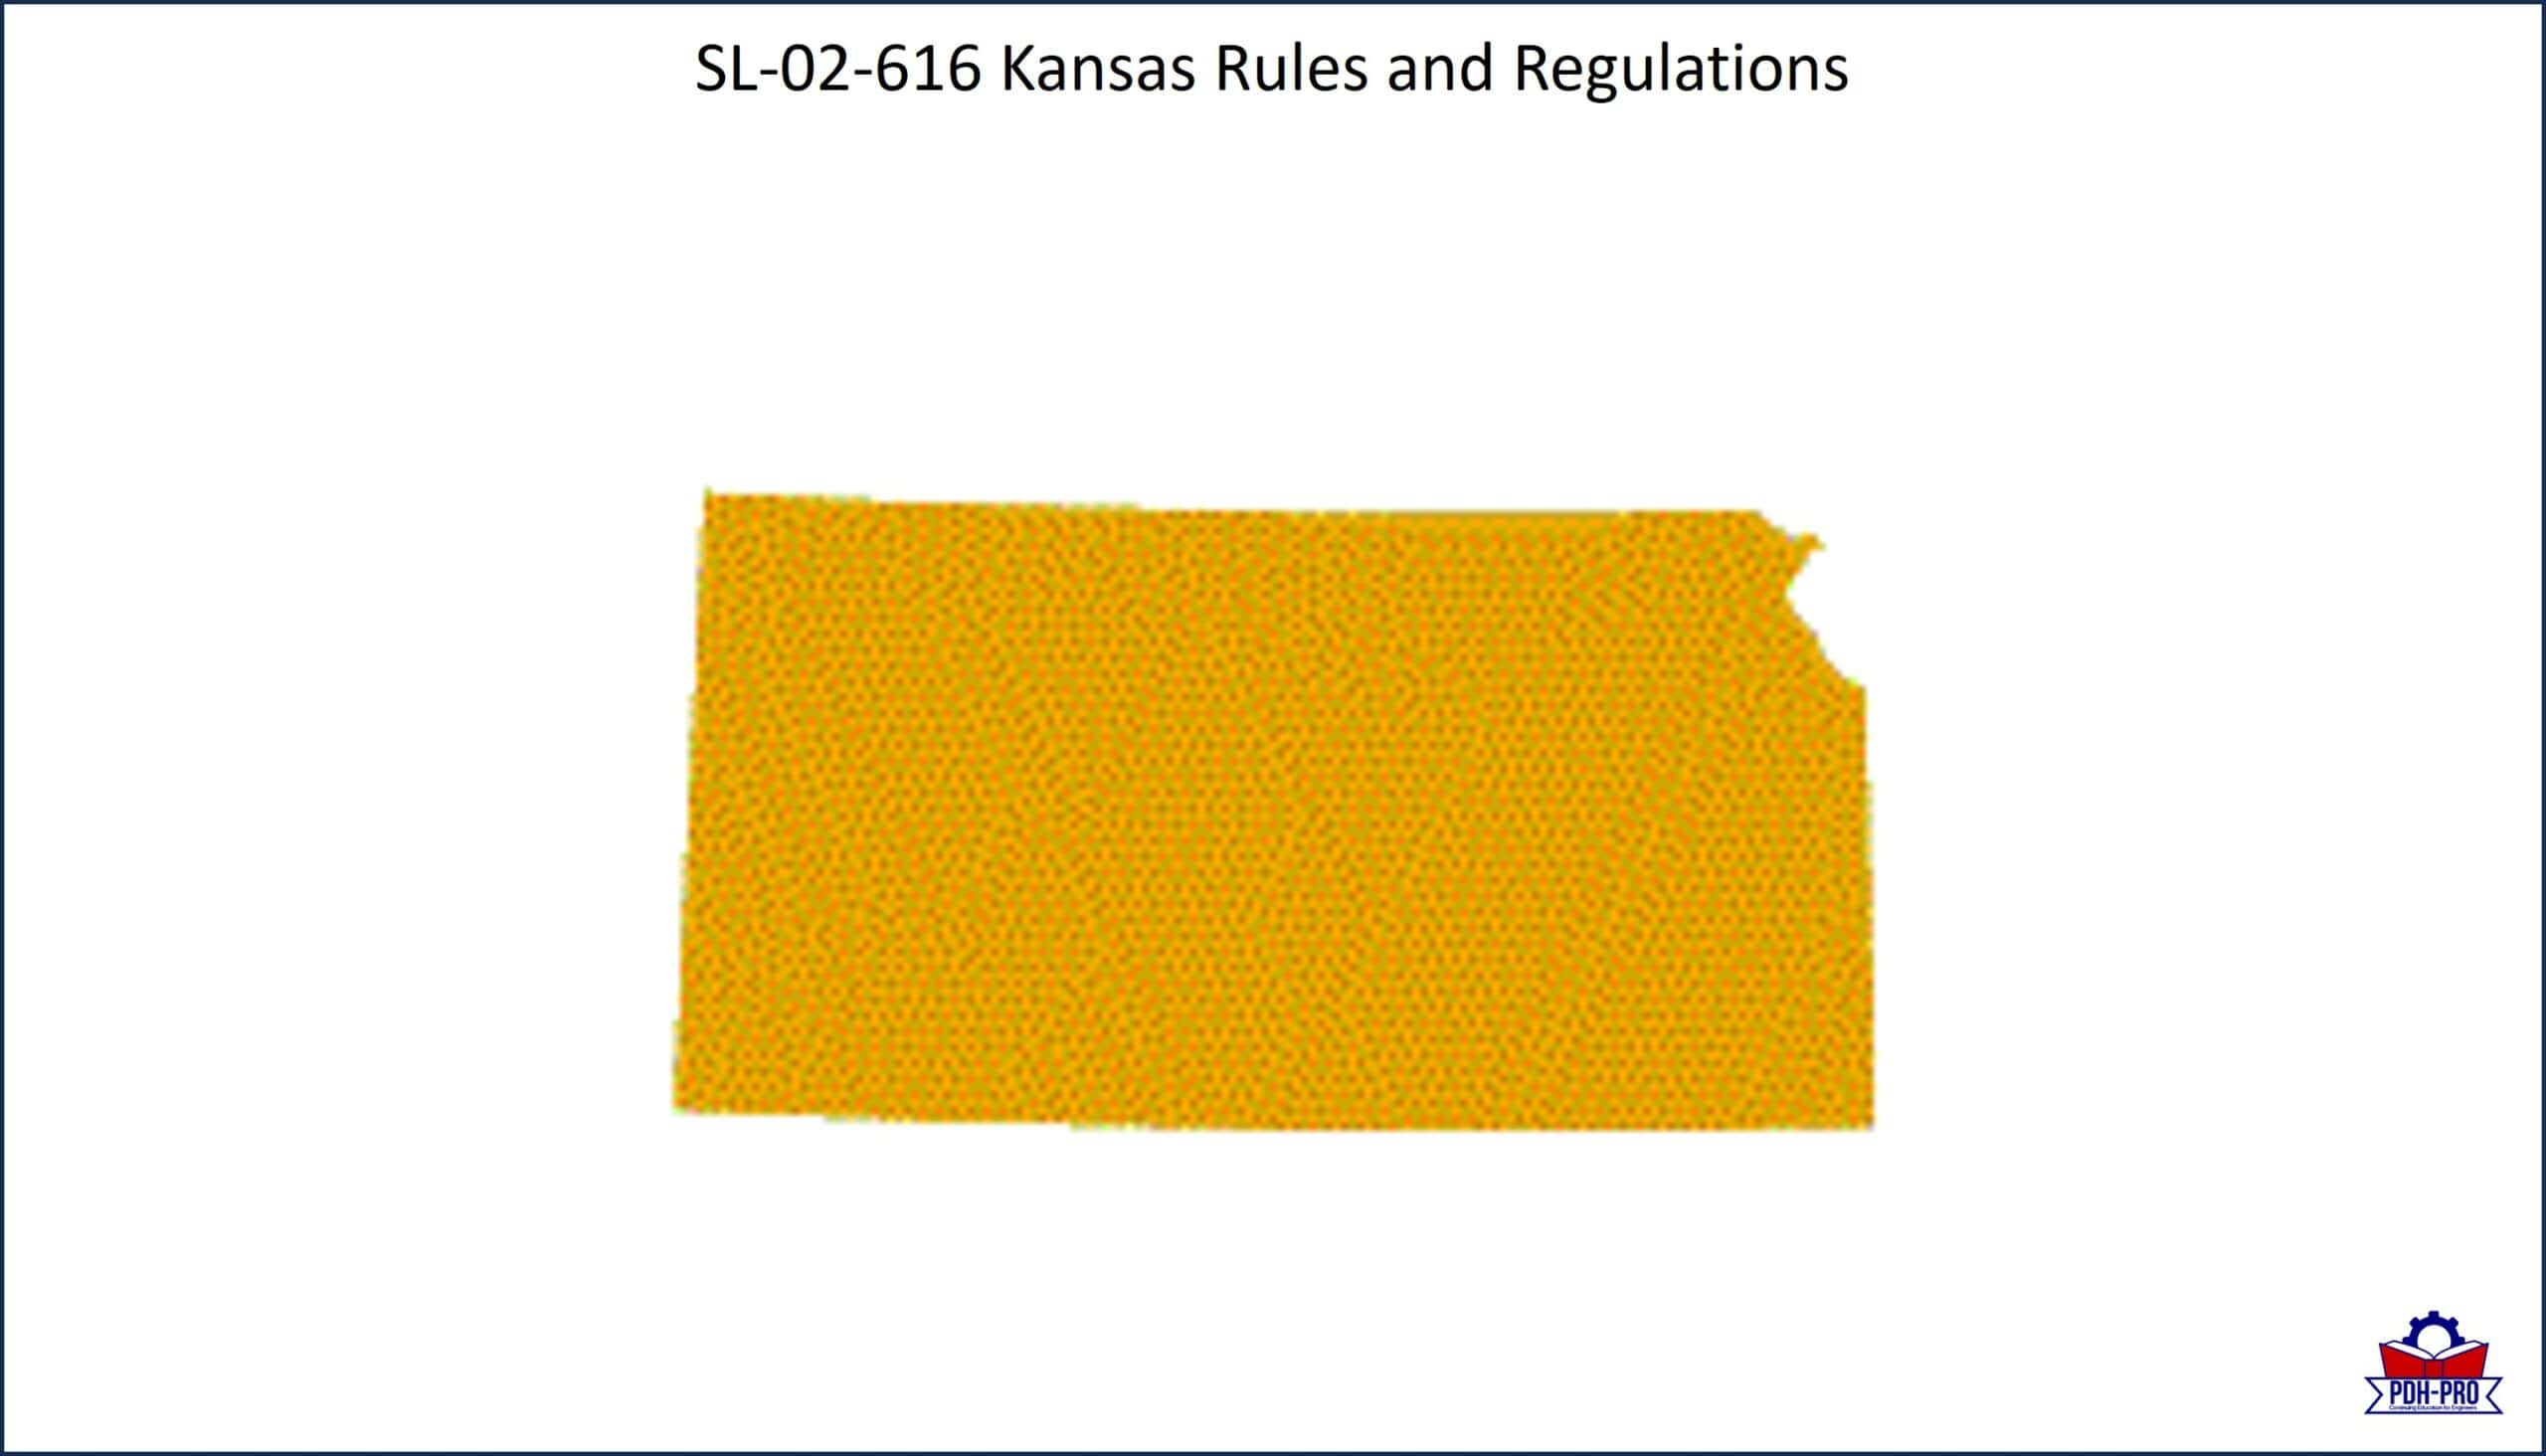 Kansas Rules and Regulations